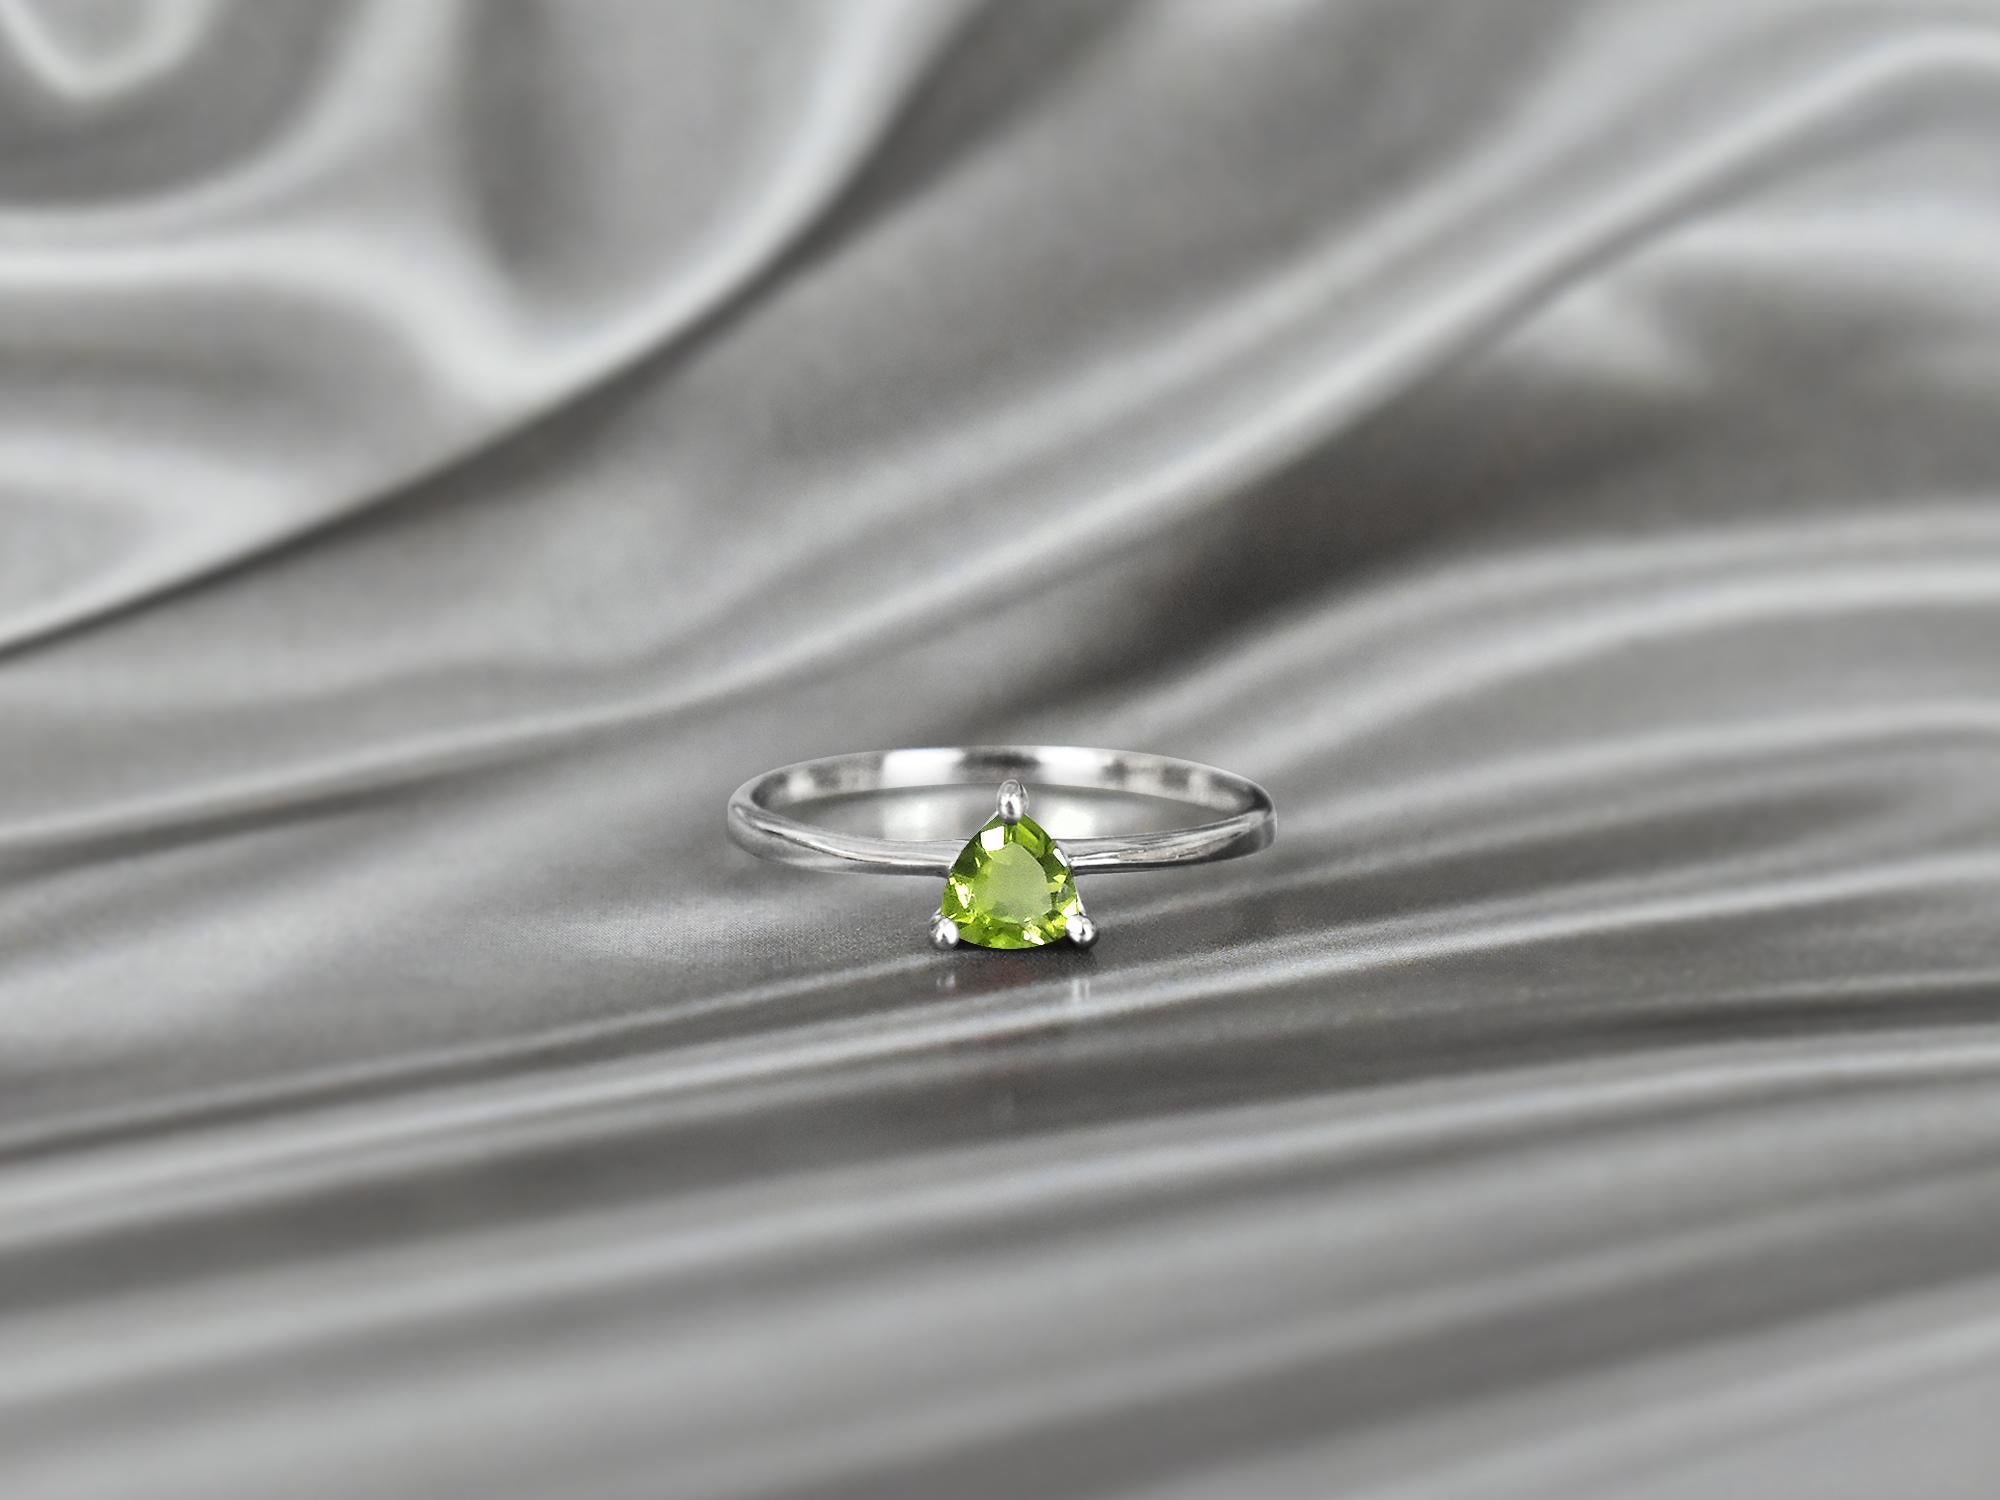 For Sale:  10k Gold Trillion Gemstone 6 mm Trillion Gemstone Engagement Ring Stackable Ring 9